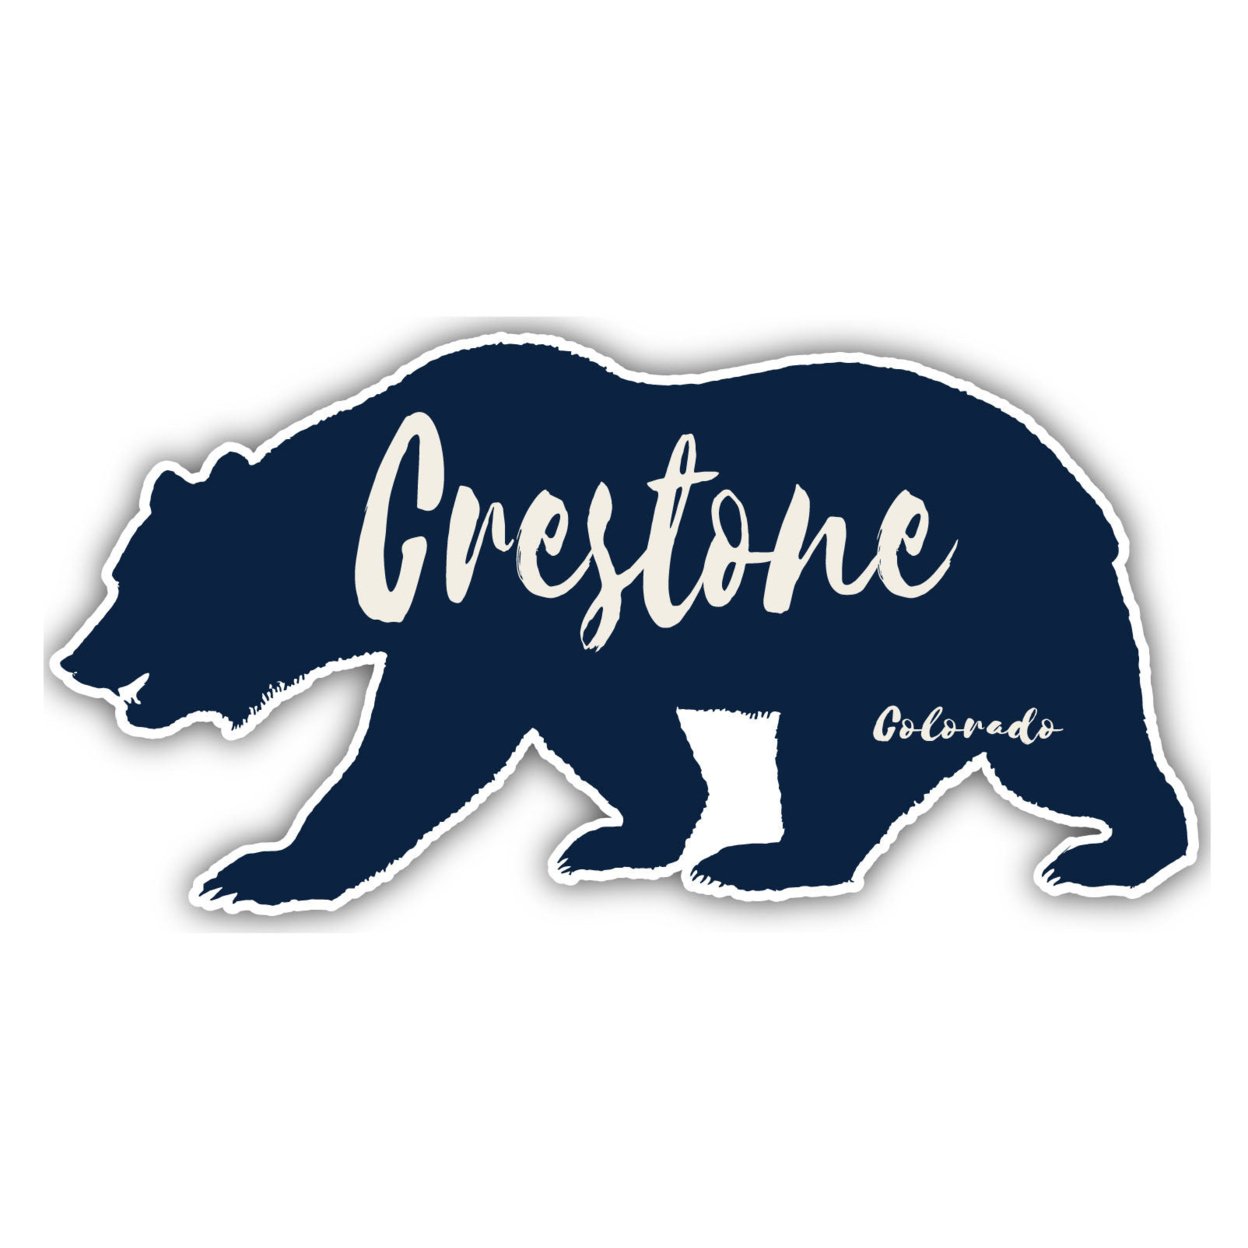 Crestone Colorado Souvenir Decorative Stickers (Choose Theme And Size) - Single Unit, 10-Inch, Tent